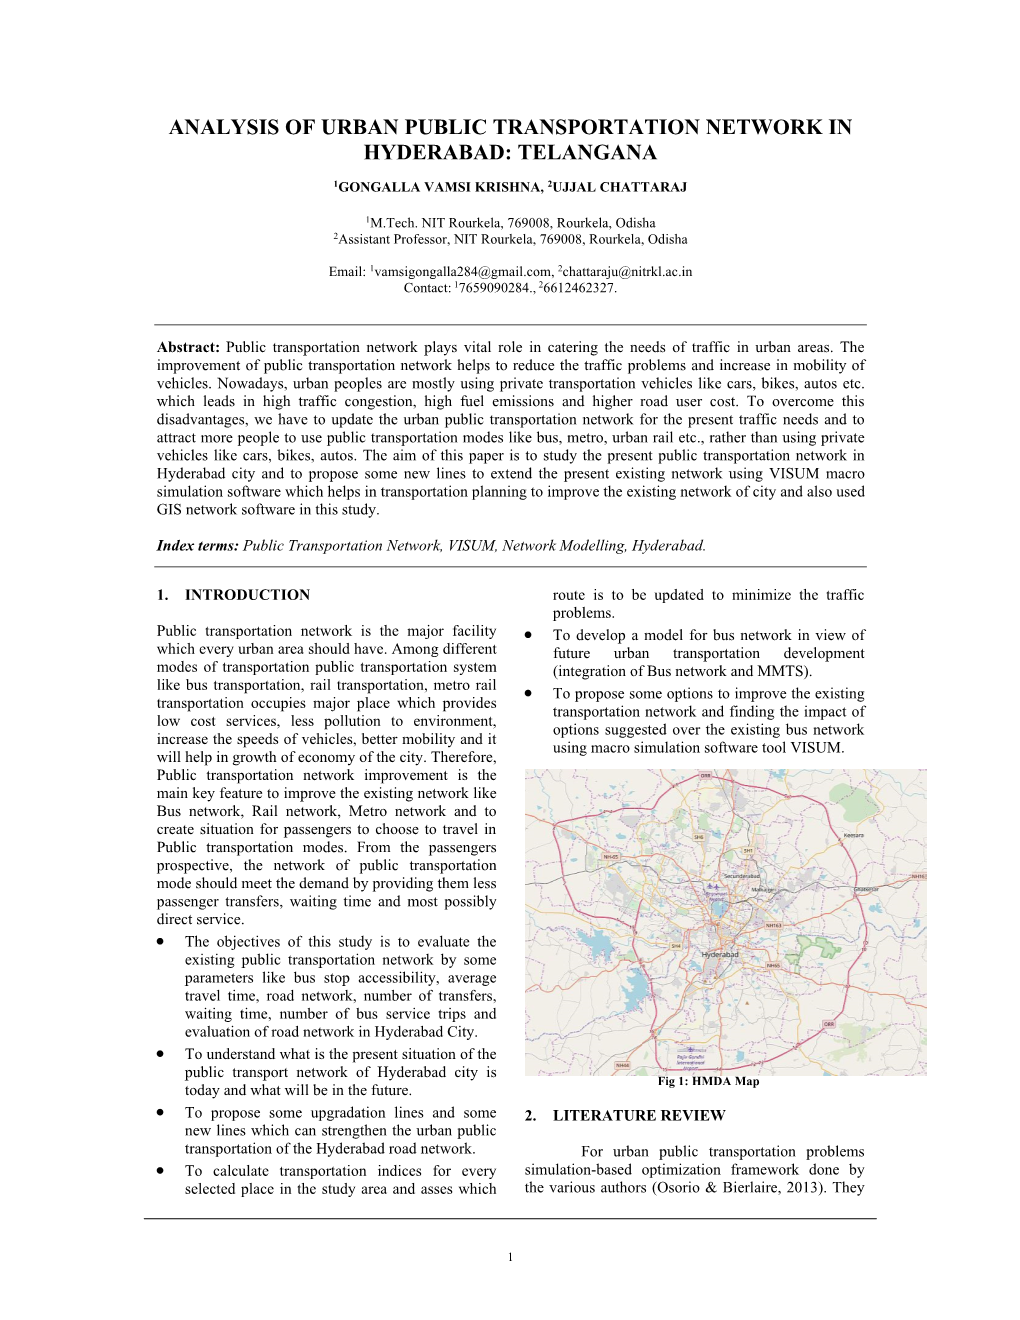 Analysis of Urban Public Transportation Network in Hyderabad: Telangana